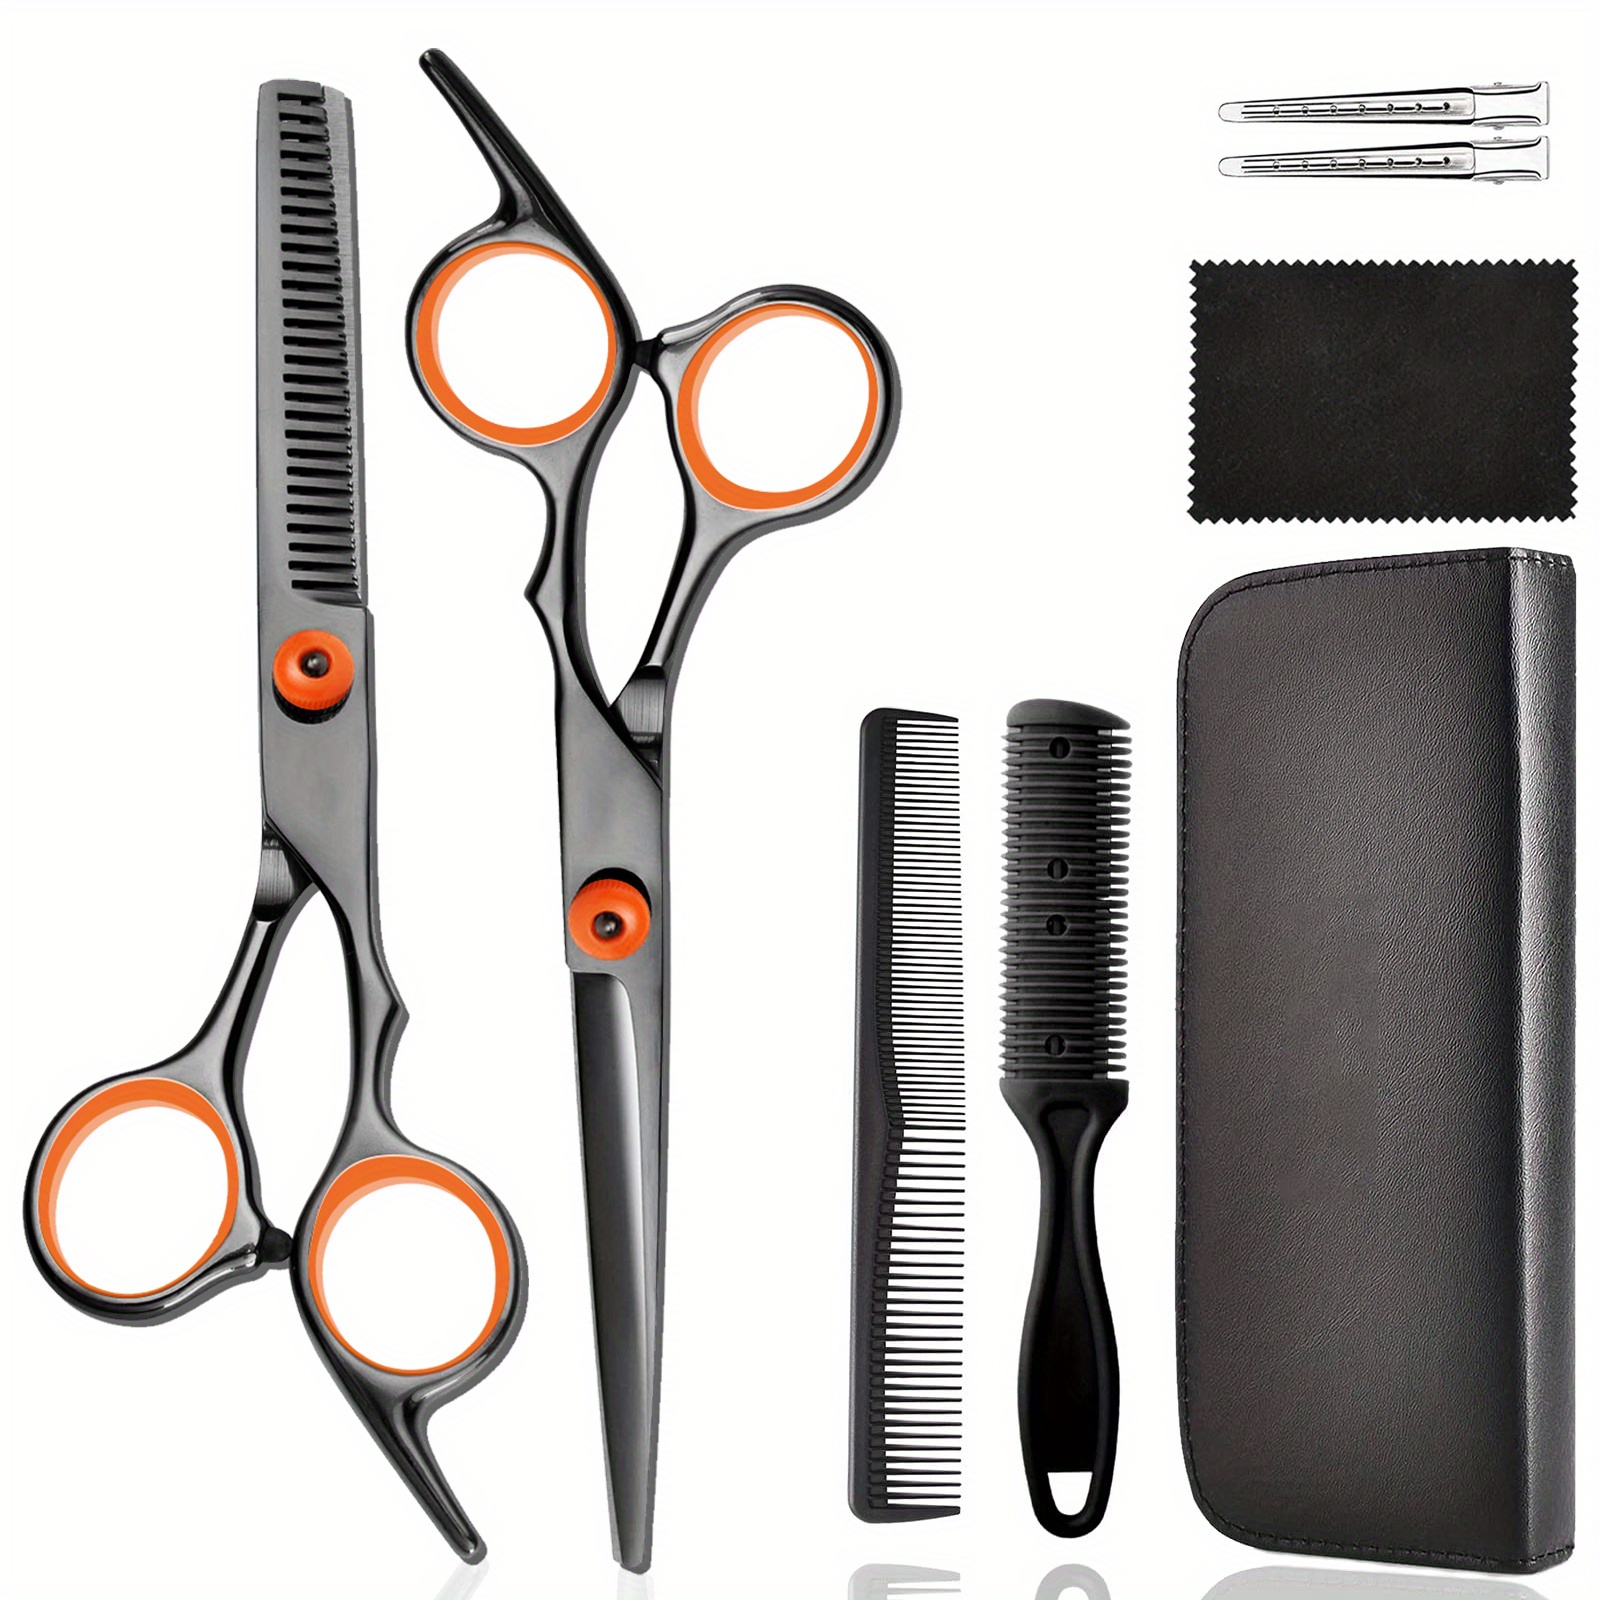 8 Pcs Hair Cutting Scissors Kit,Black Blue Professional Home Hair Cutting Barber/Salon Thinning Shears,Hair Cutting Shears Hair Cut Blending Salon